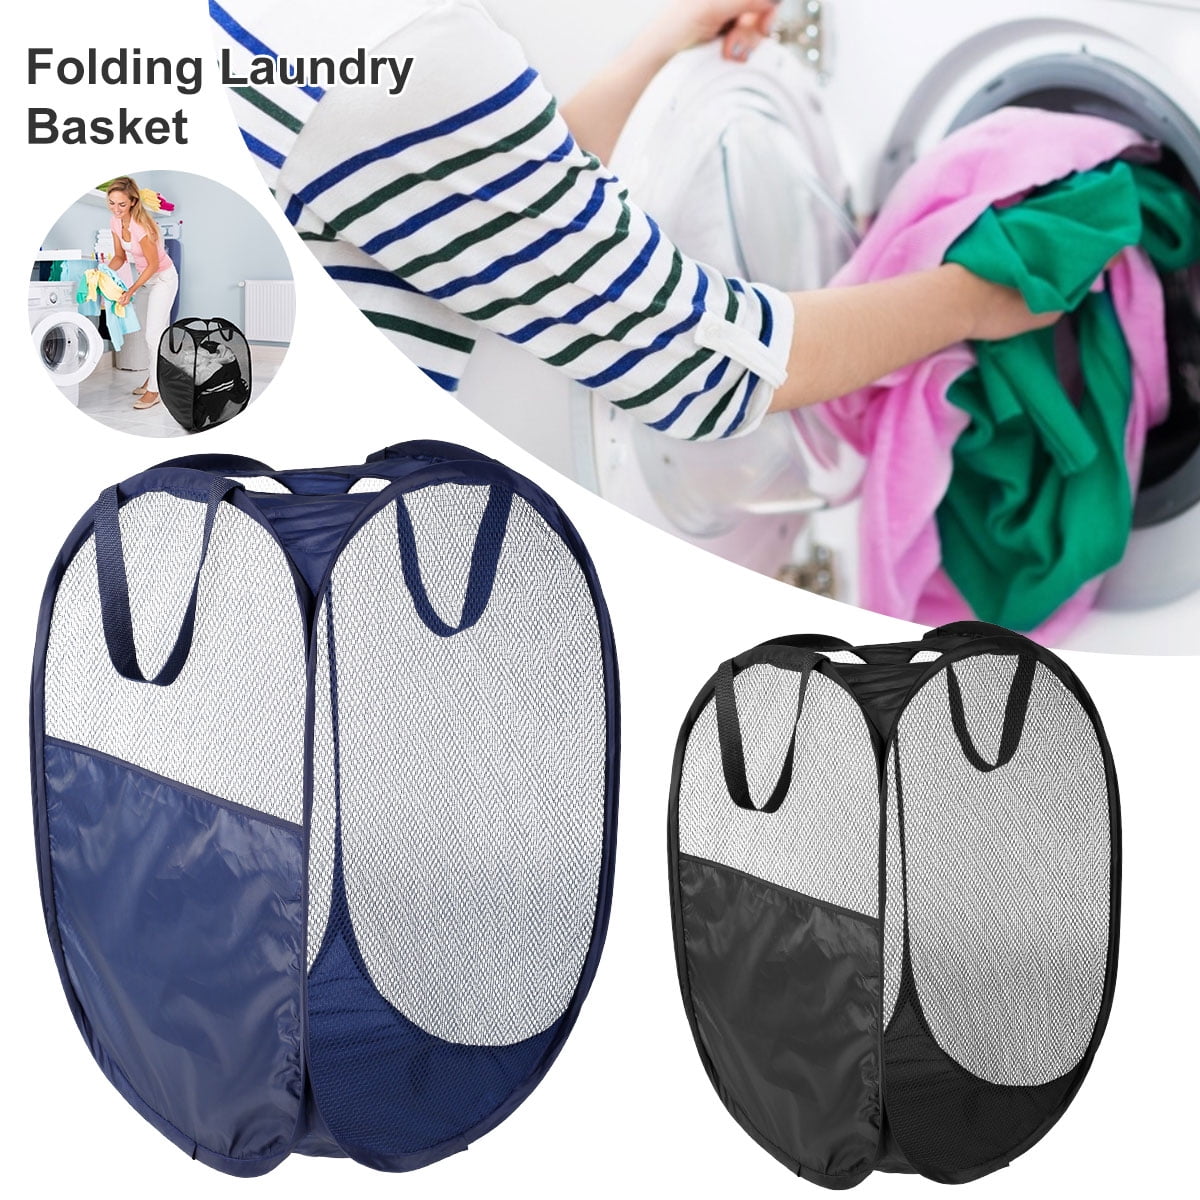 Collapsible Folding Laundry Basket Hamper Clothes Storage Washing Pop Up Bin New 